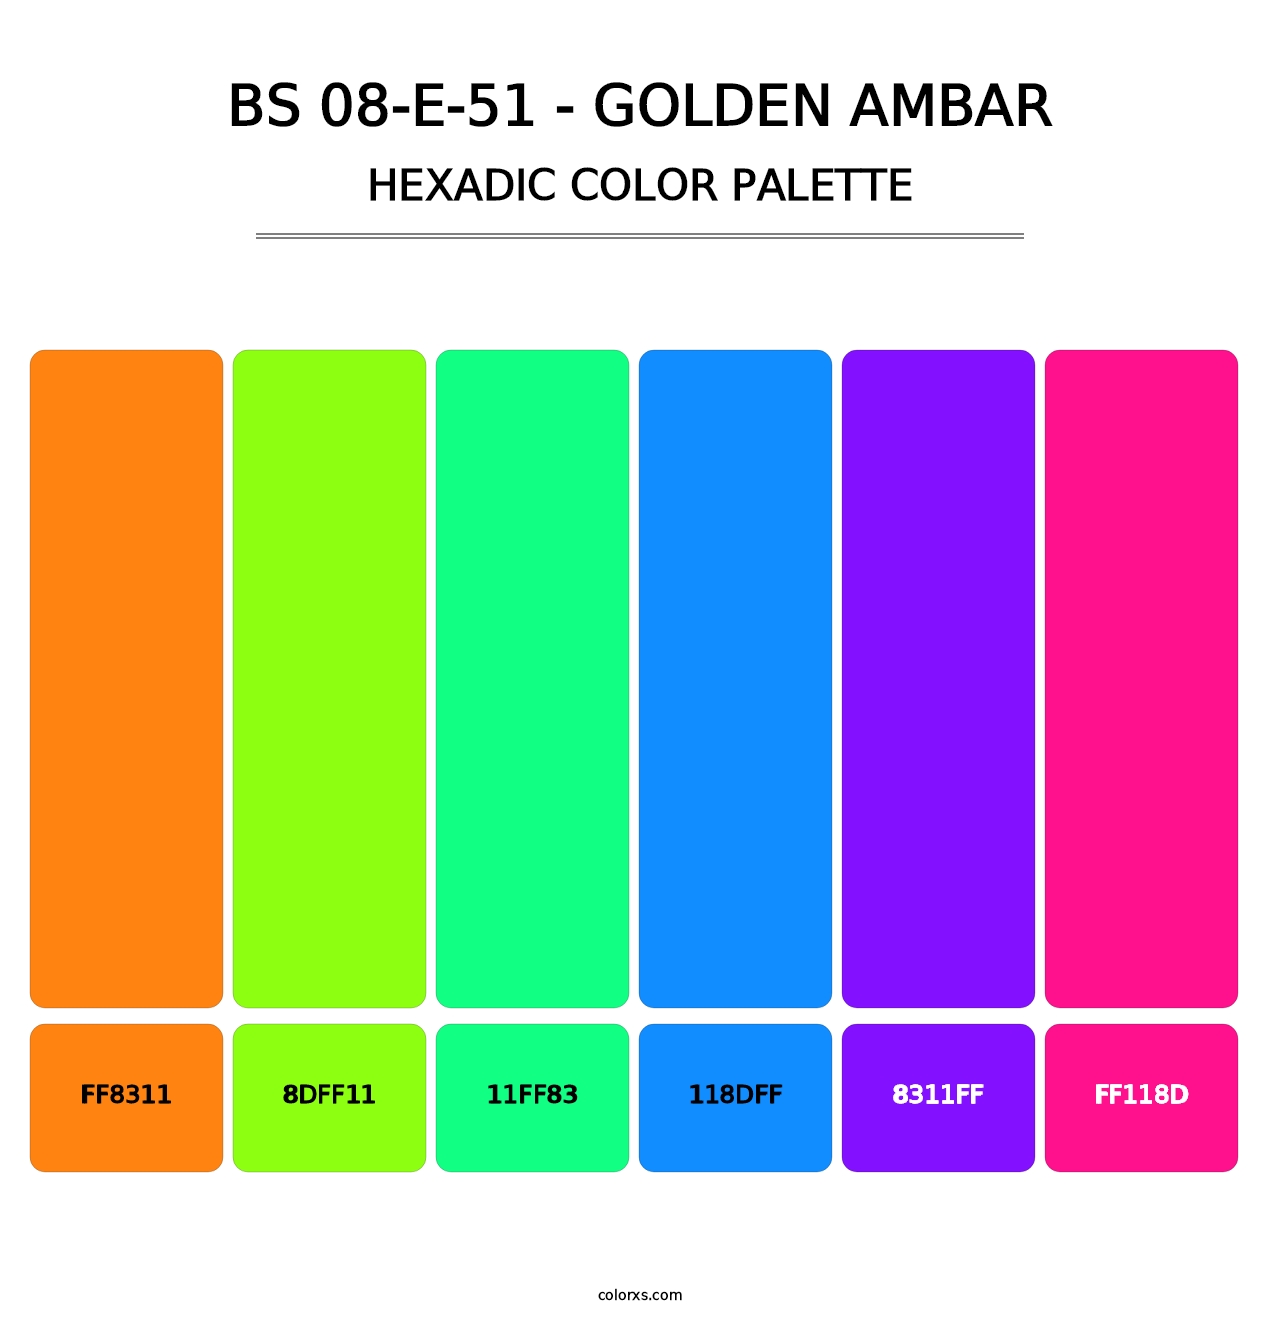 BS 08-E-51 - Golden Ambar - Hexadic Color Palette